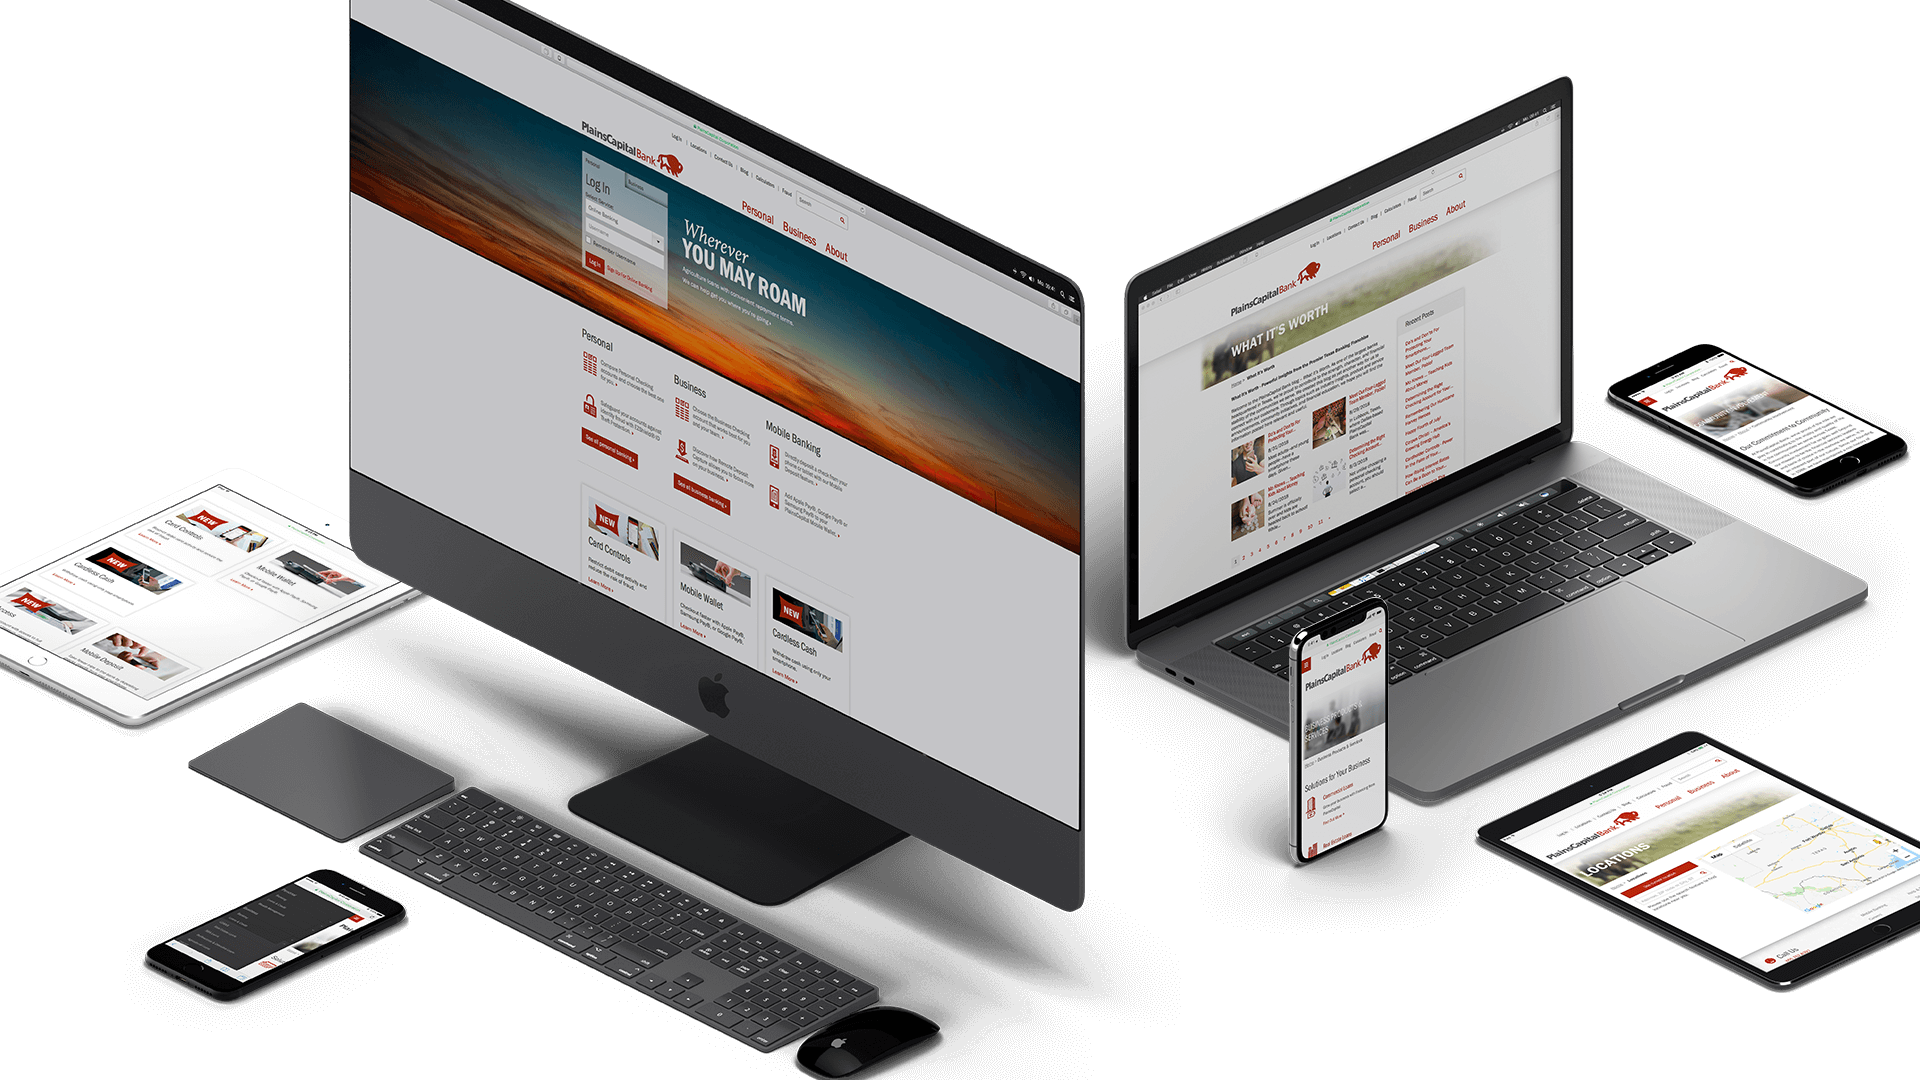 PlainsCapital Bank website on mobile and desktop screens